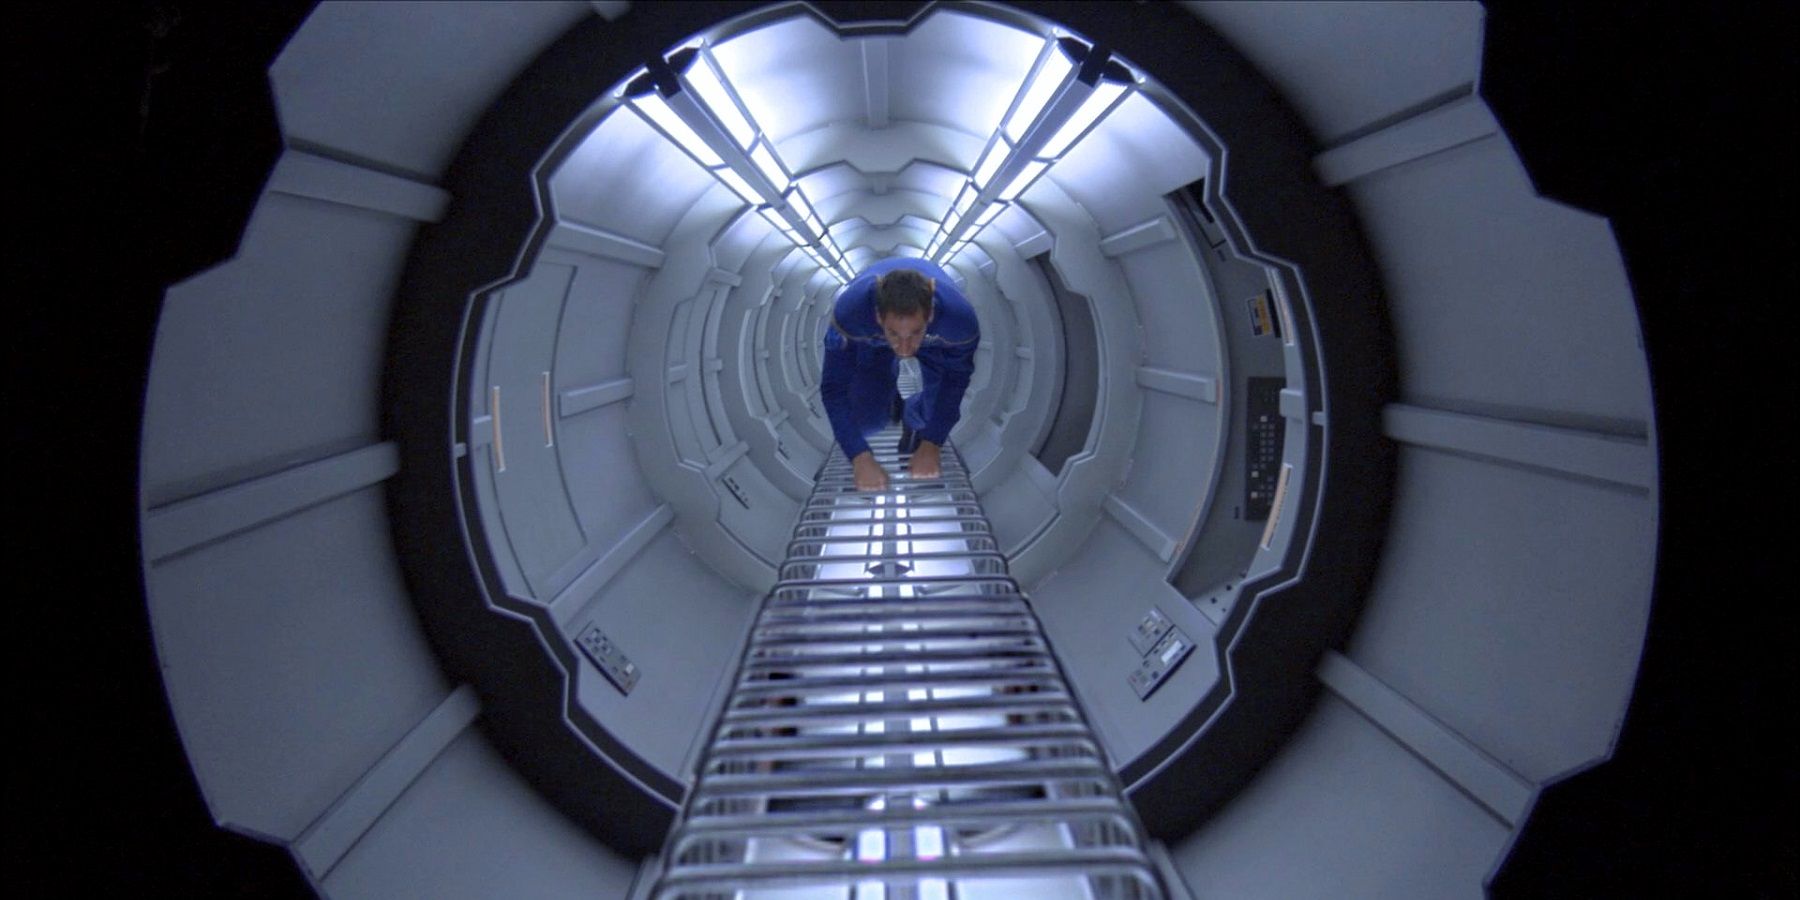 Captain Archer climbing up a jefferies tube in Star Trek Enterprise